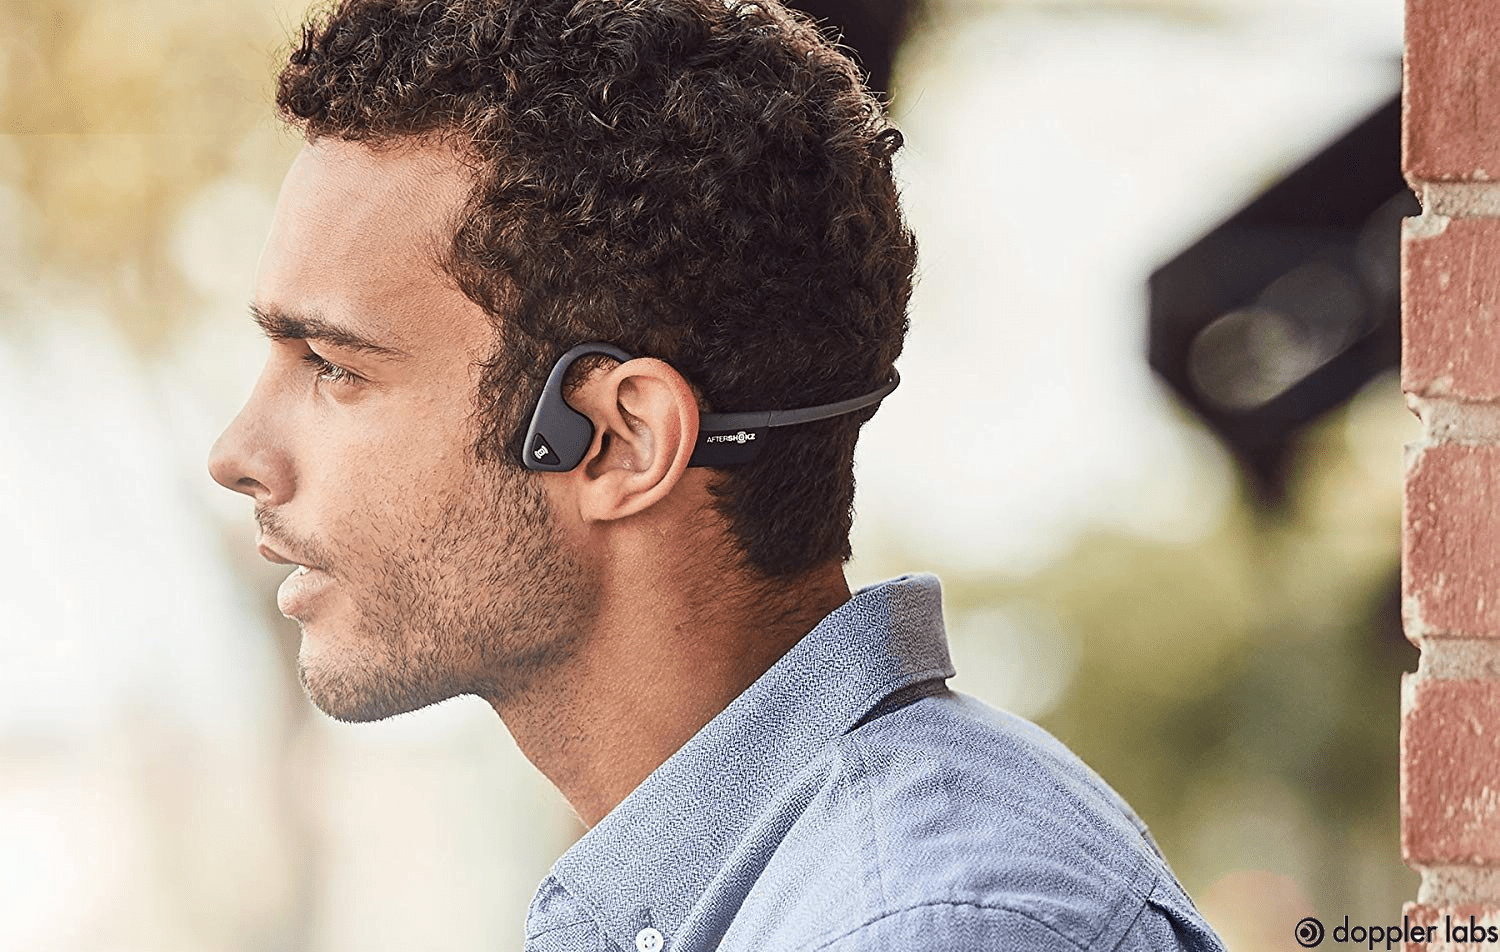 How bone conduction headphones work